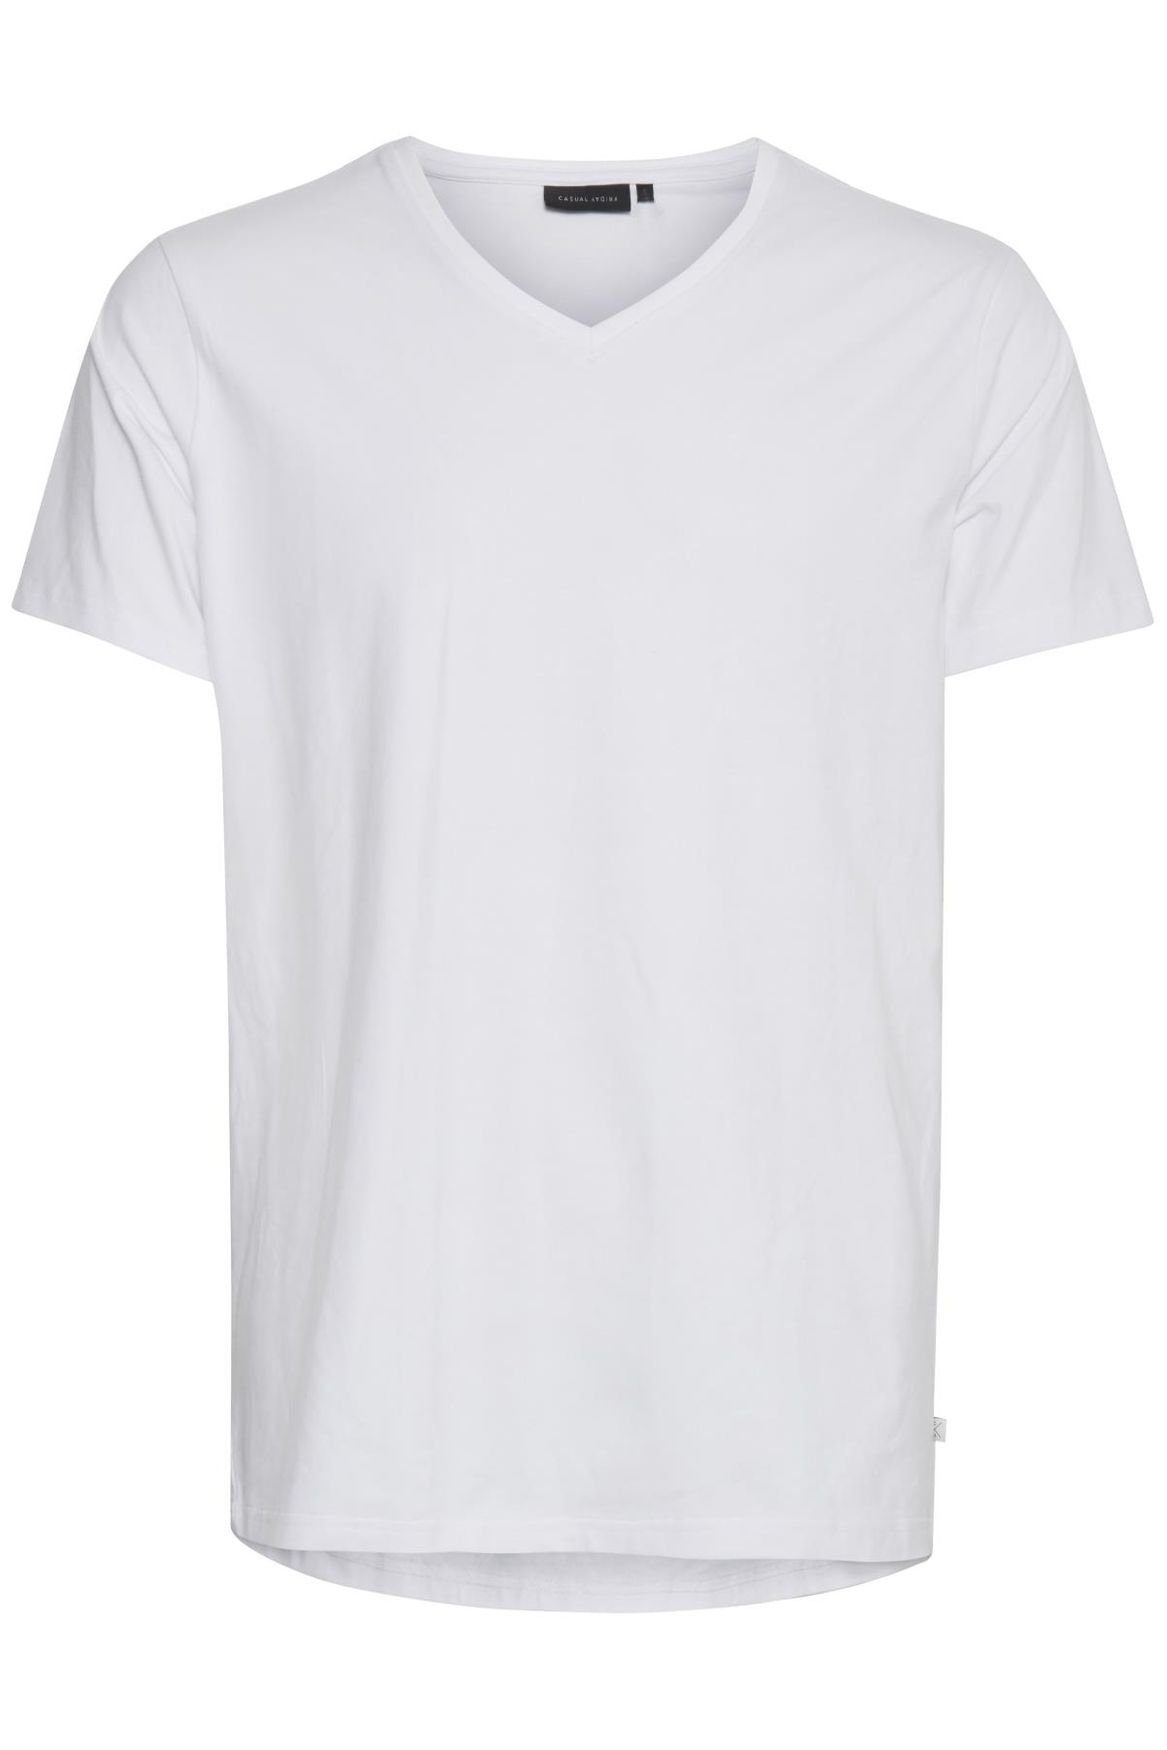 T-Shirt Weiß Kurzarm Einfarbiges Friday in T-Shirt V-Ausschnitt Casual LINCOLN 4458 Basic